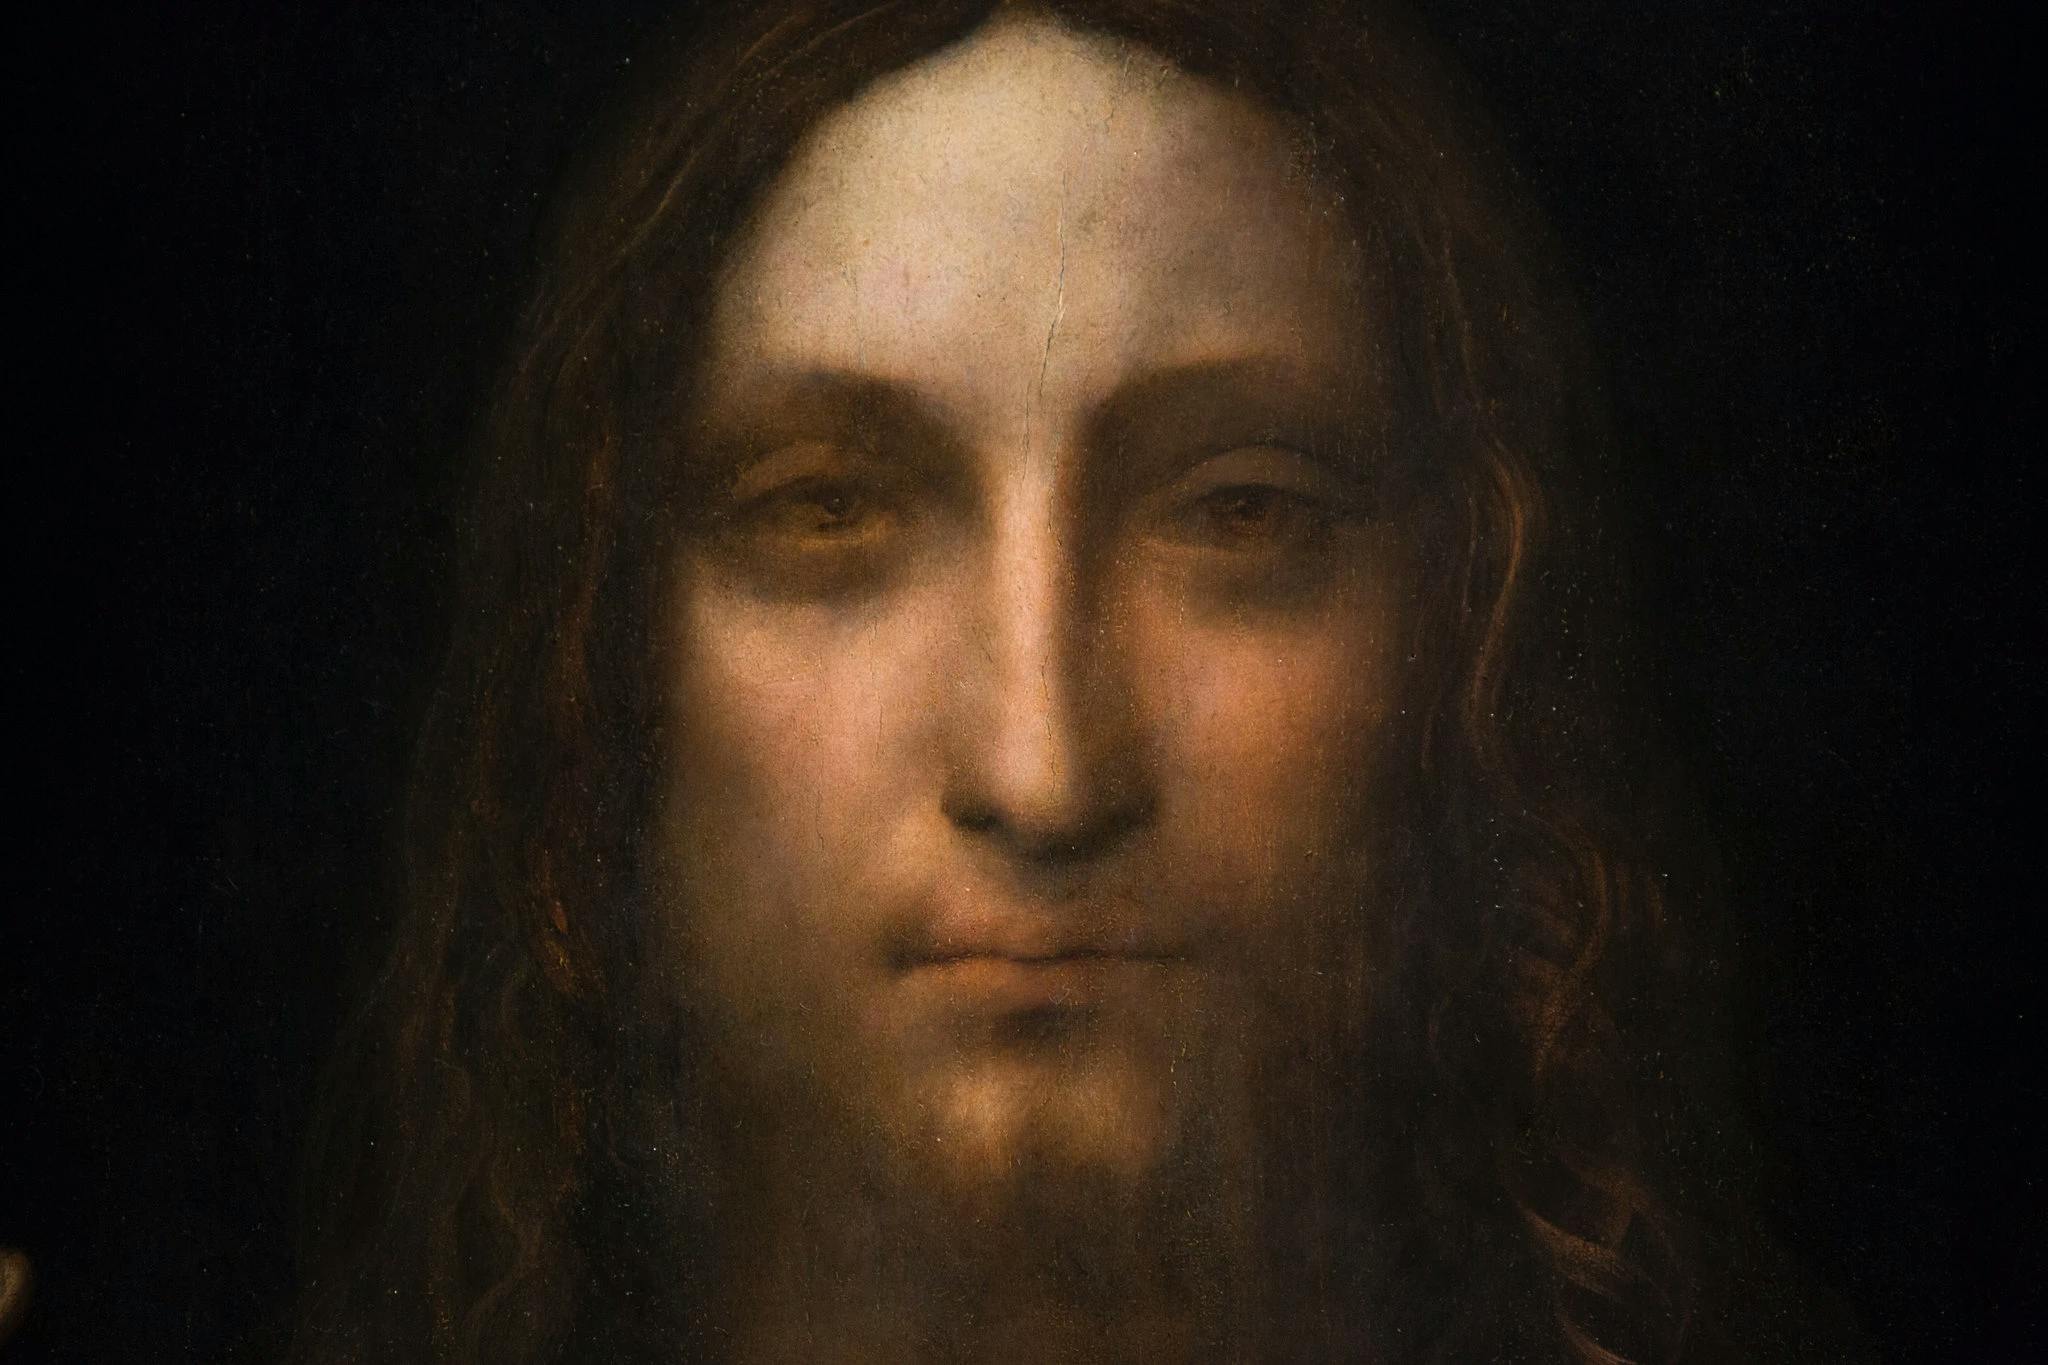 The Leonardo d Vinci painting "Salvator Mundi"